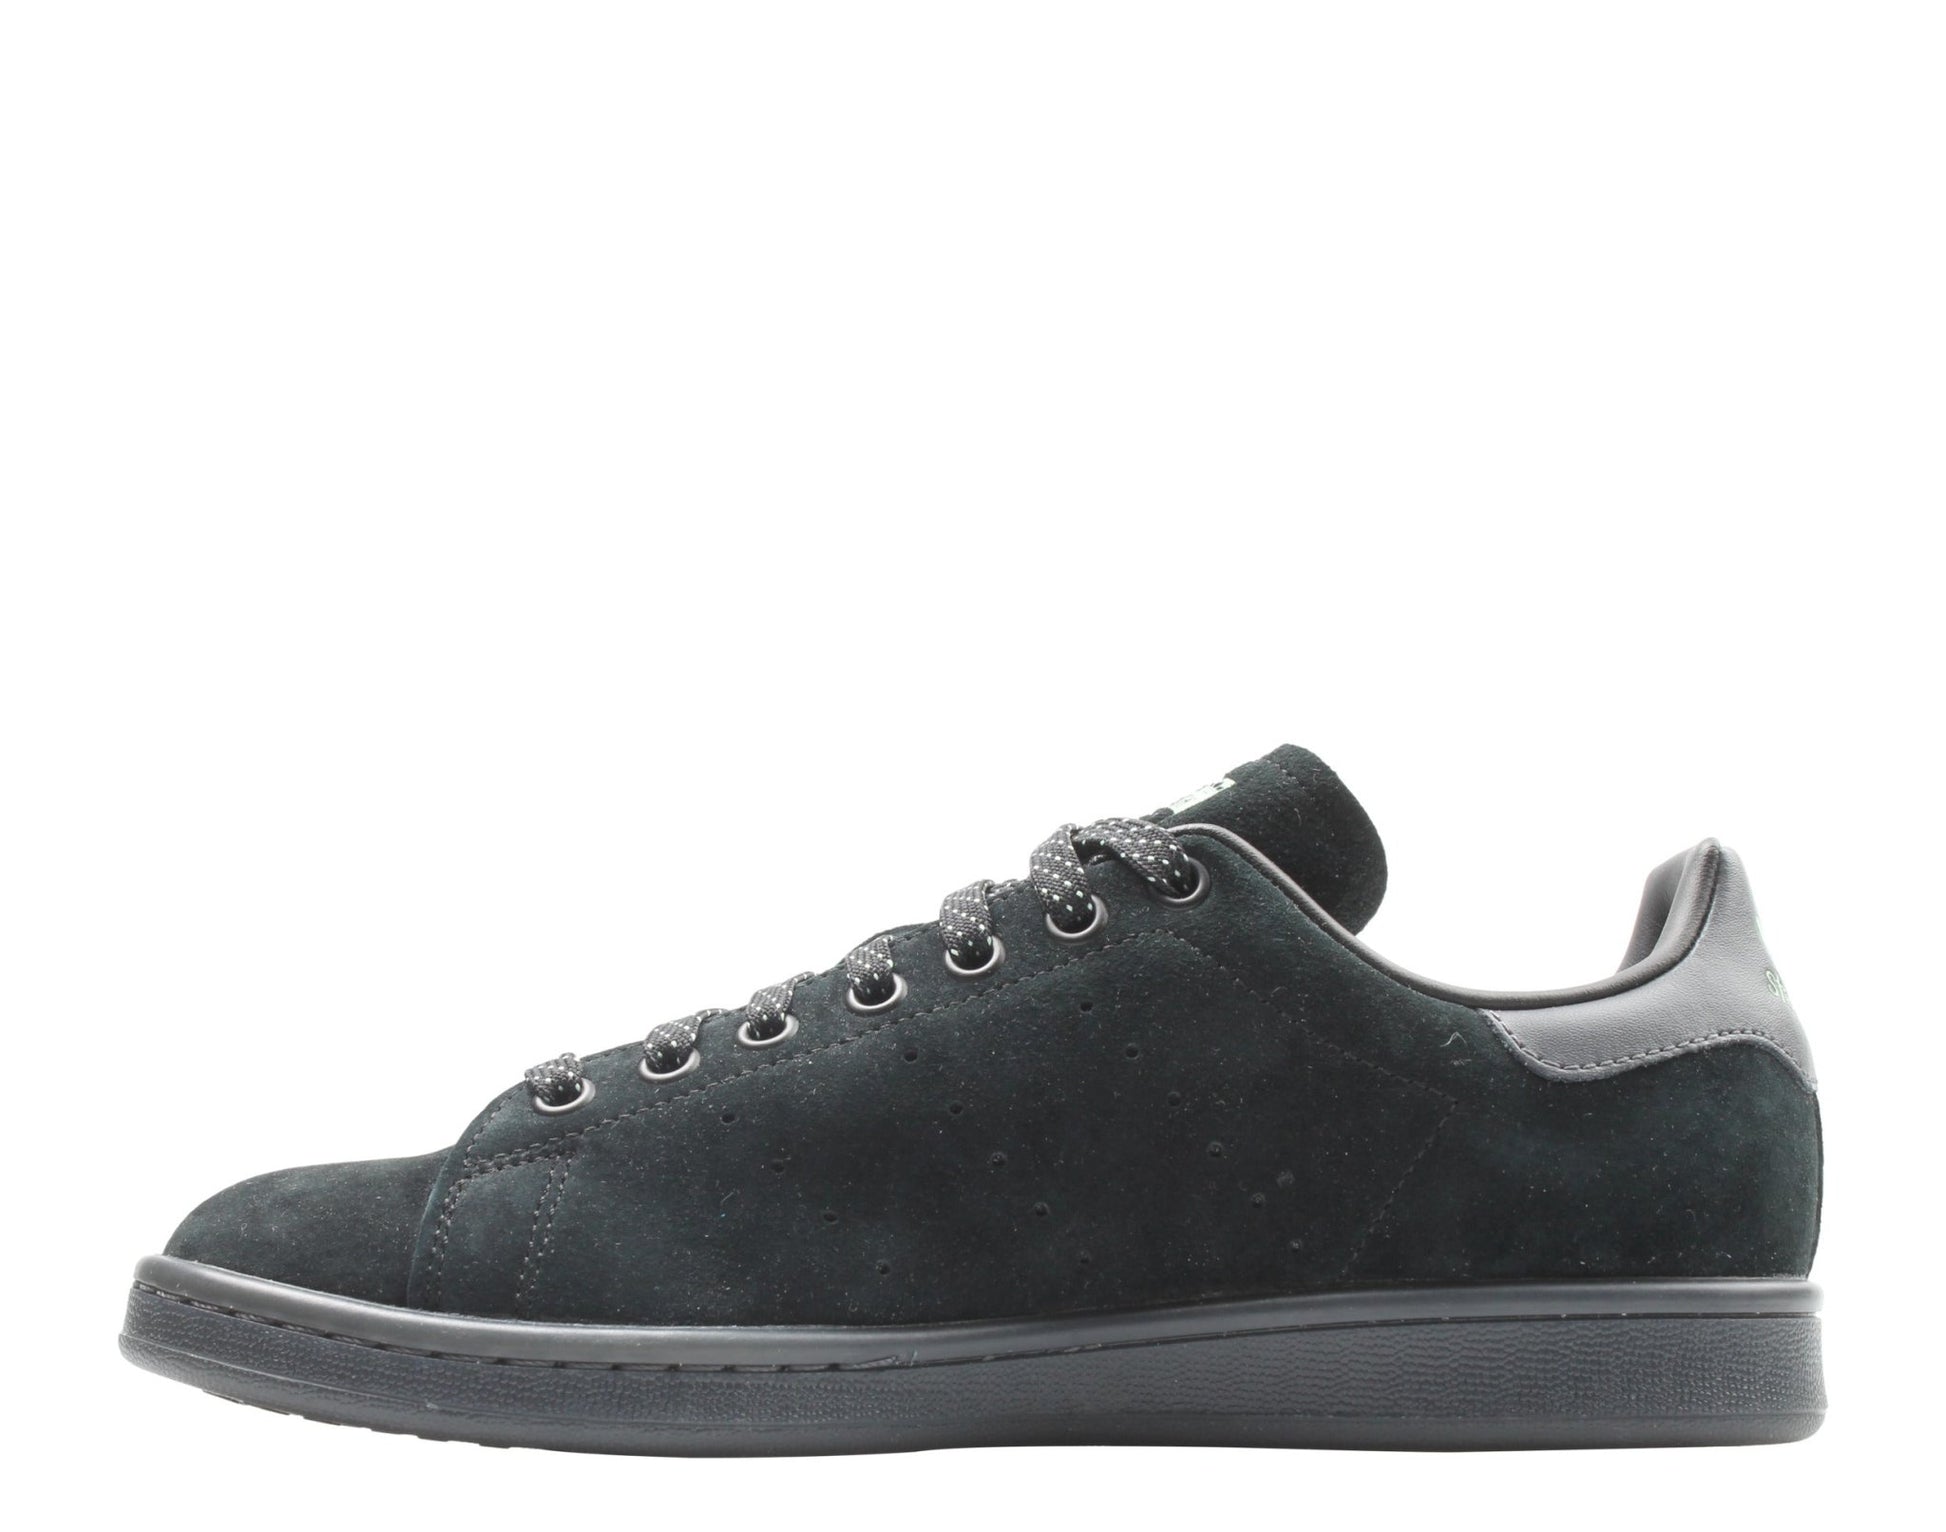 Adidas Originals Stan Smith Core Black/Blush Green Men's Tennis Shoes FW2640 - Becauze